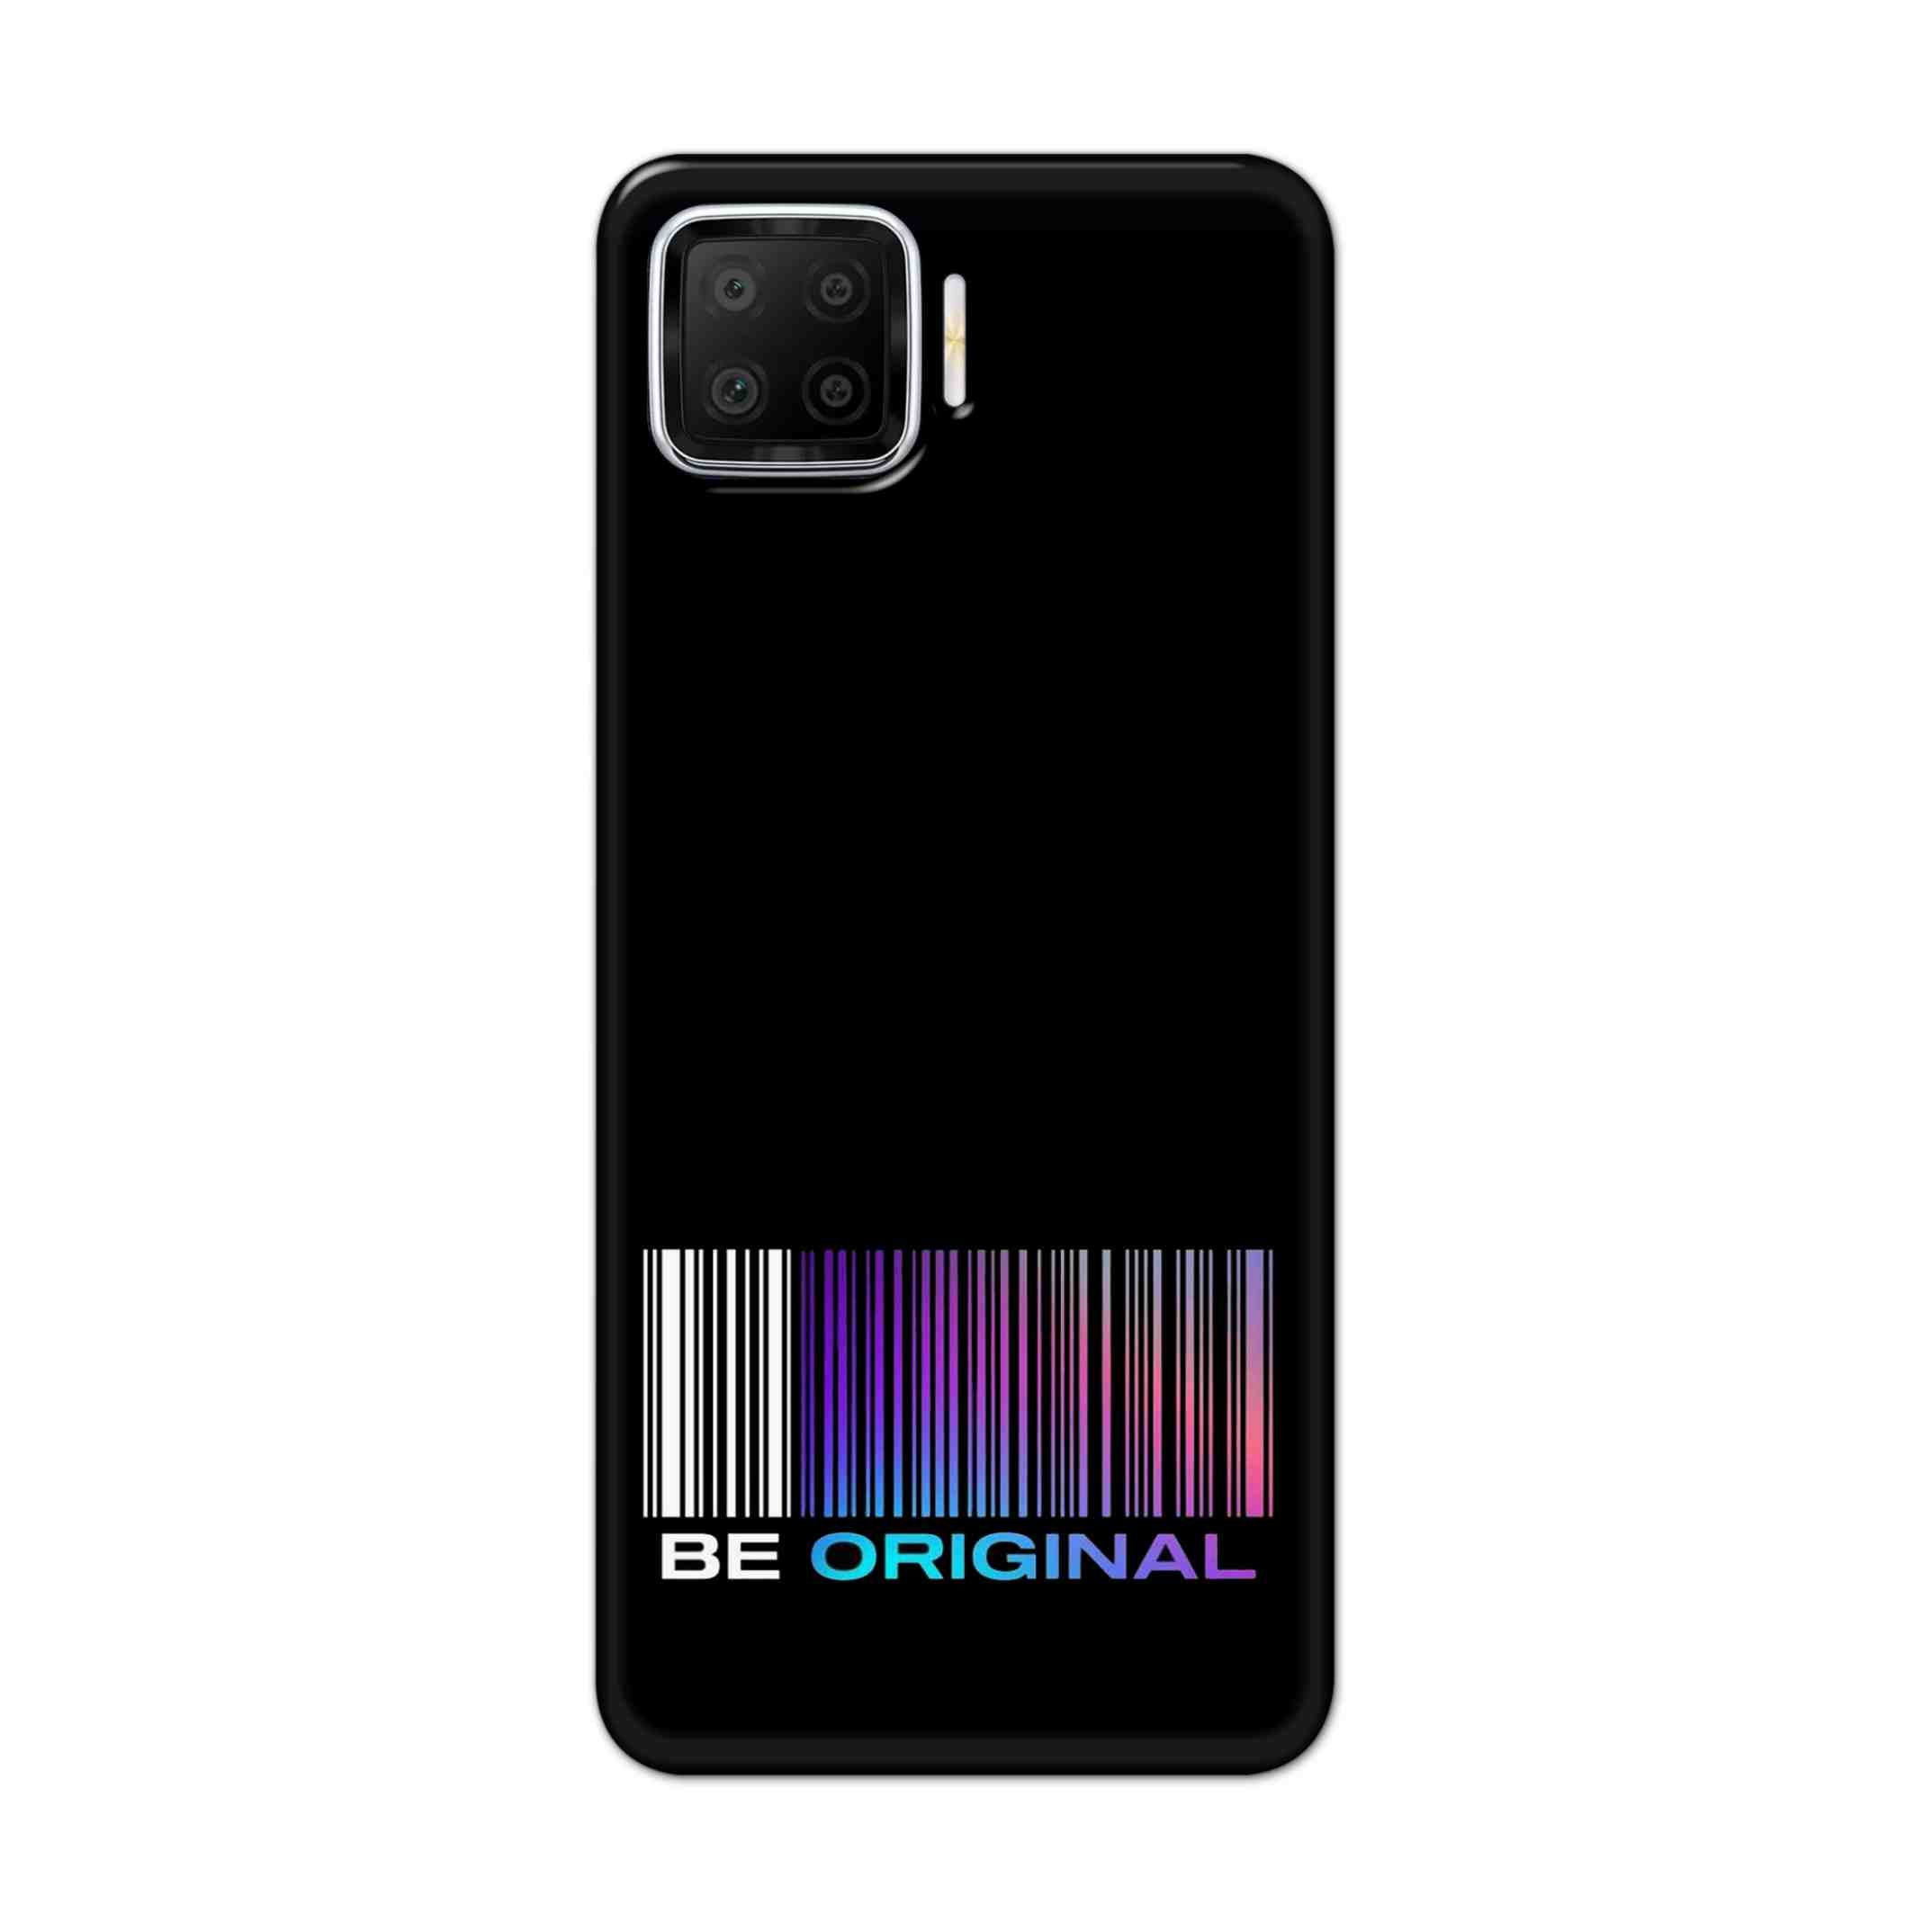 Buy Be Original Hard Back Mobile Phone Case Cover For Oppo F17 Online